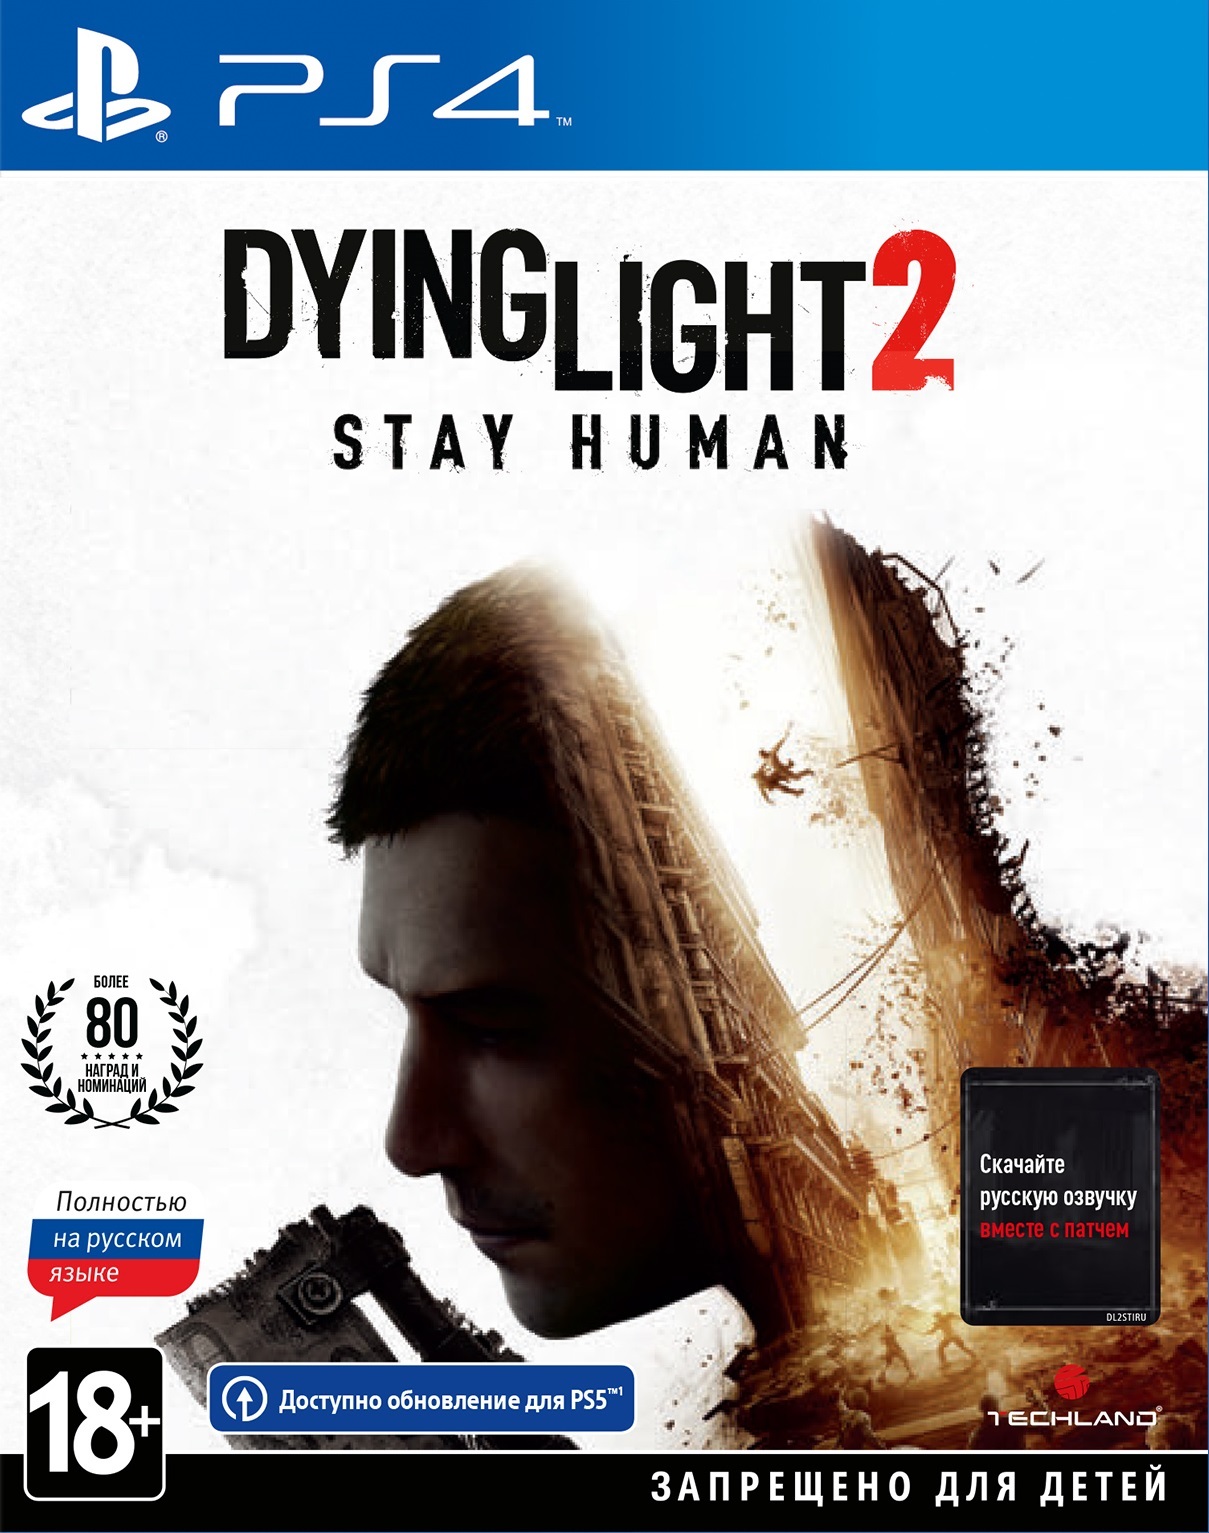 Dying Light 2: stay Human отзывы. Хьюман на русском